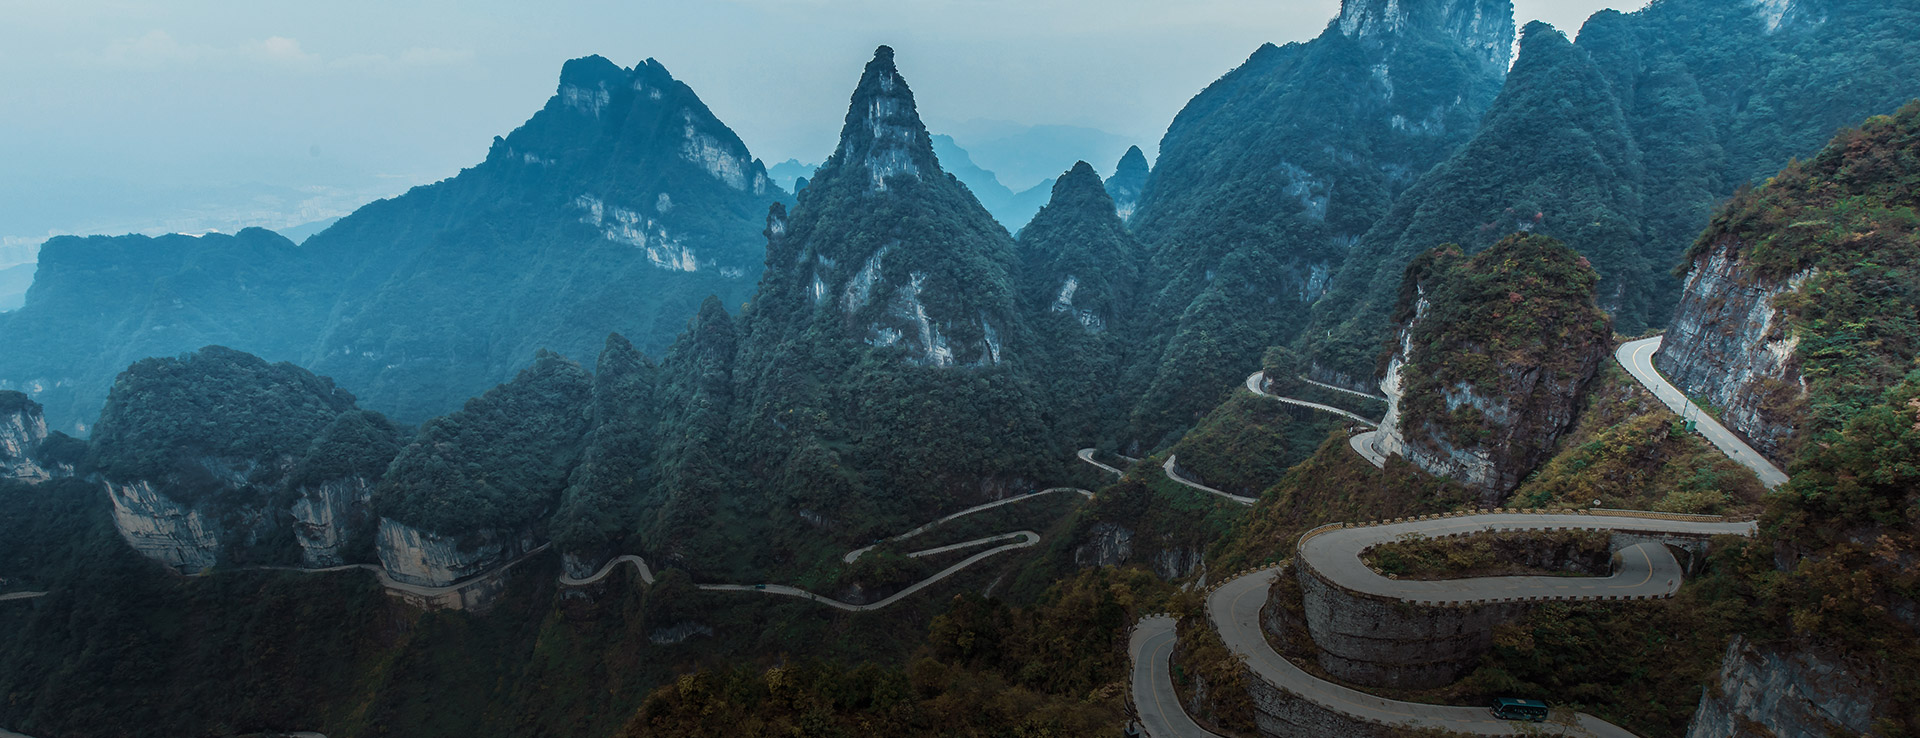 Hairpin bends on Tianmen Mountain